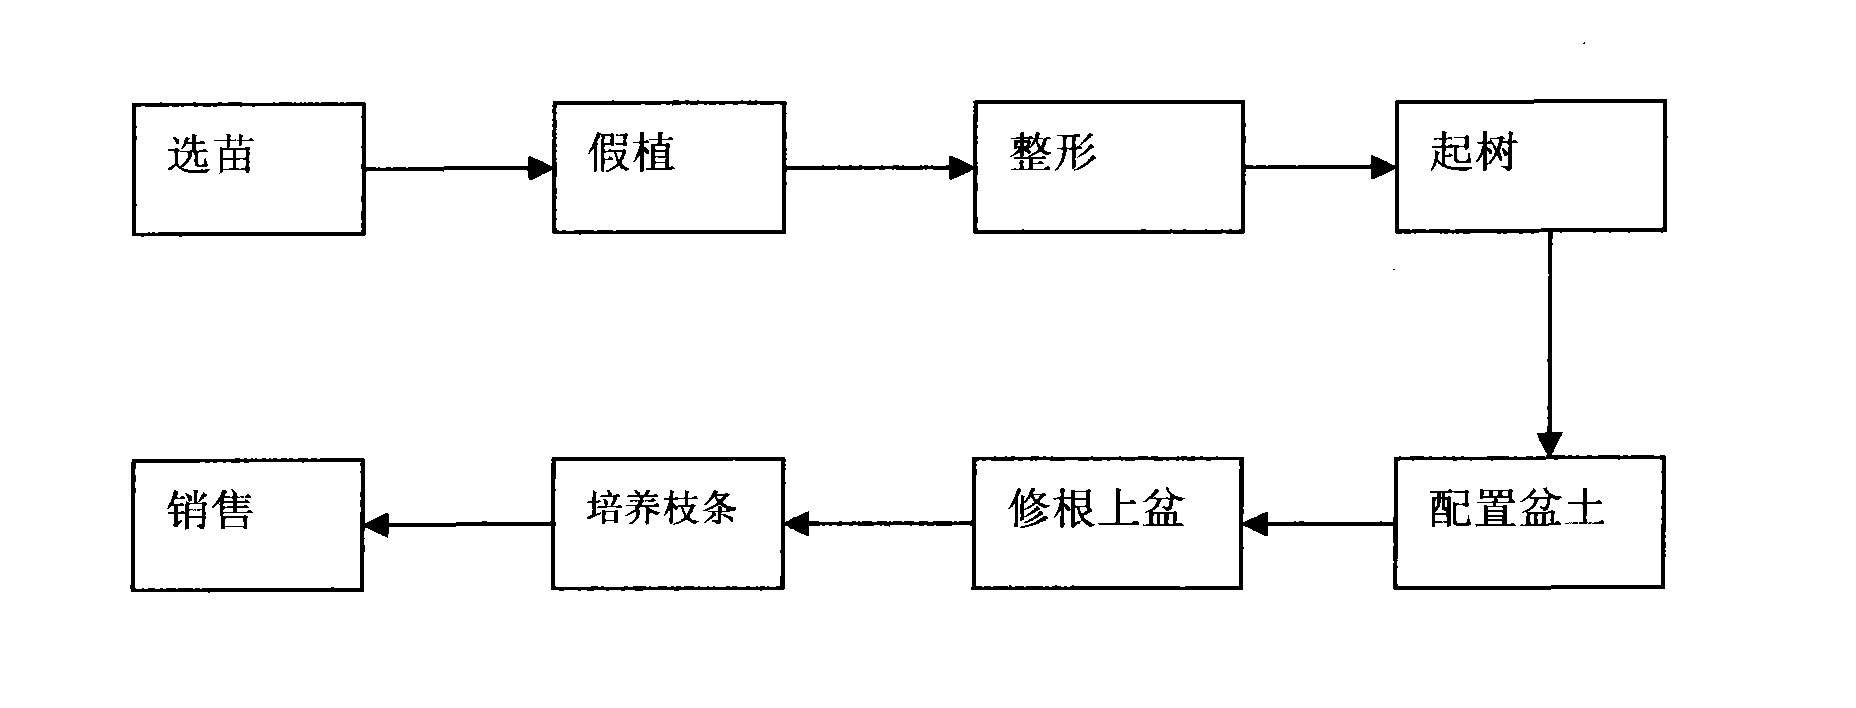 Method for cultivating bonsai Fuji apple tree